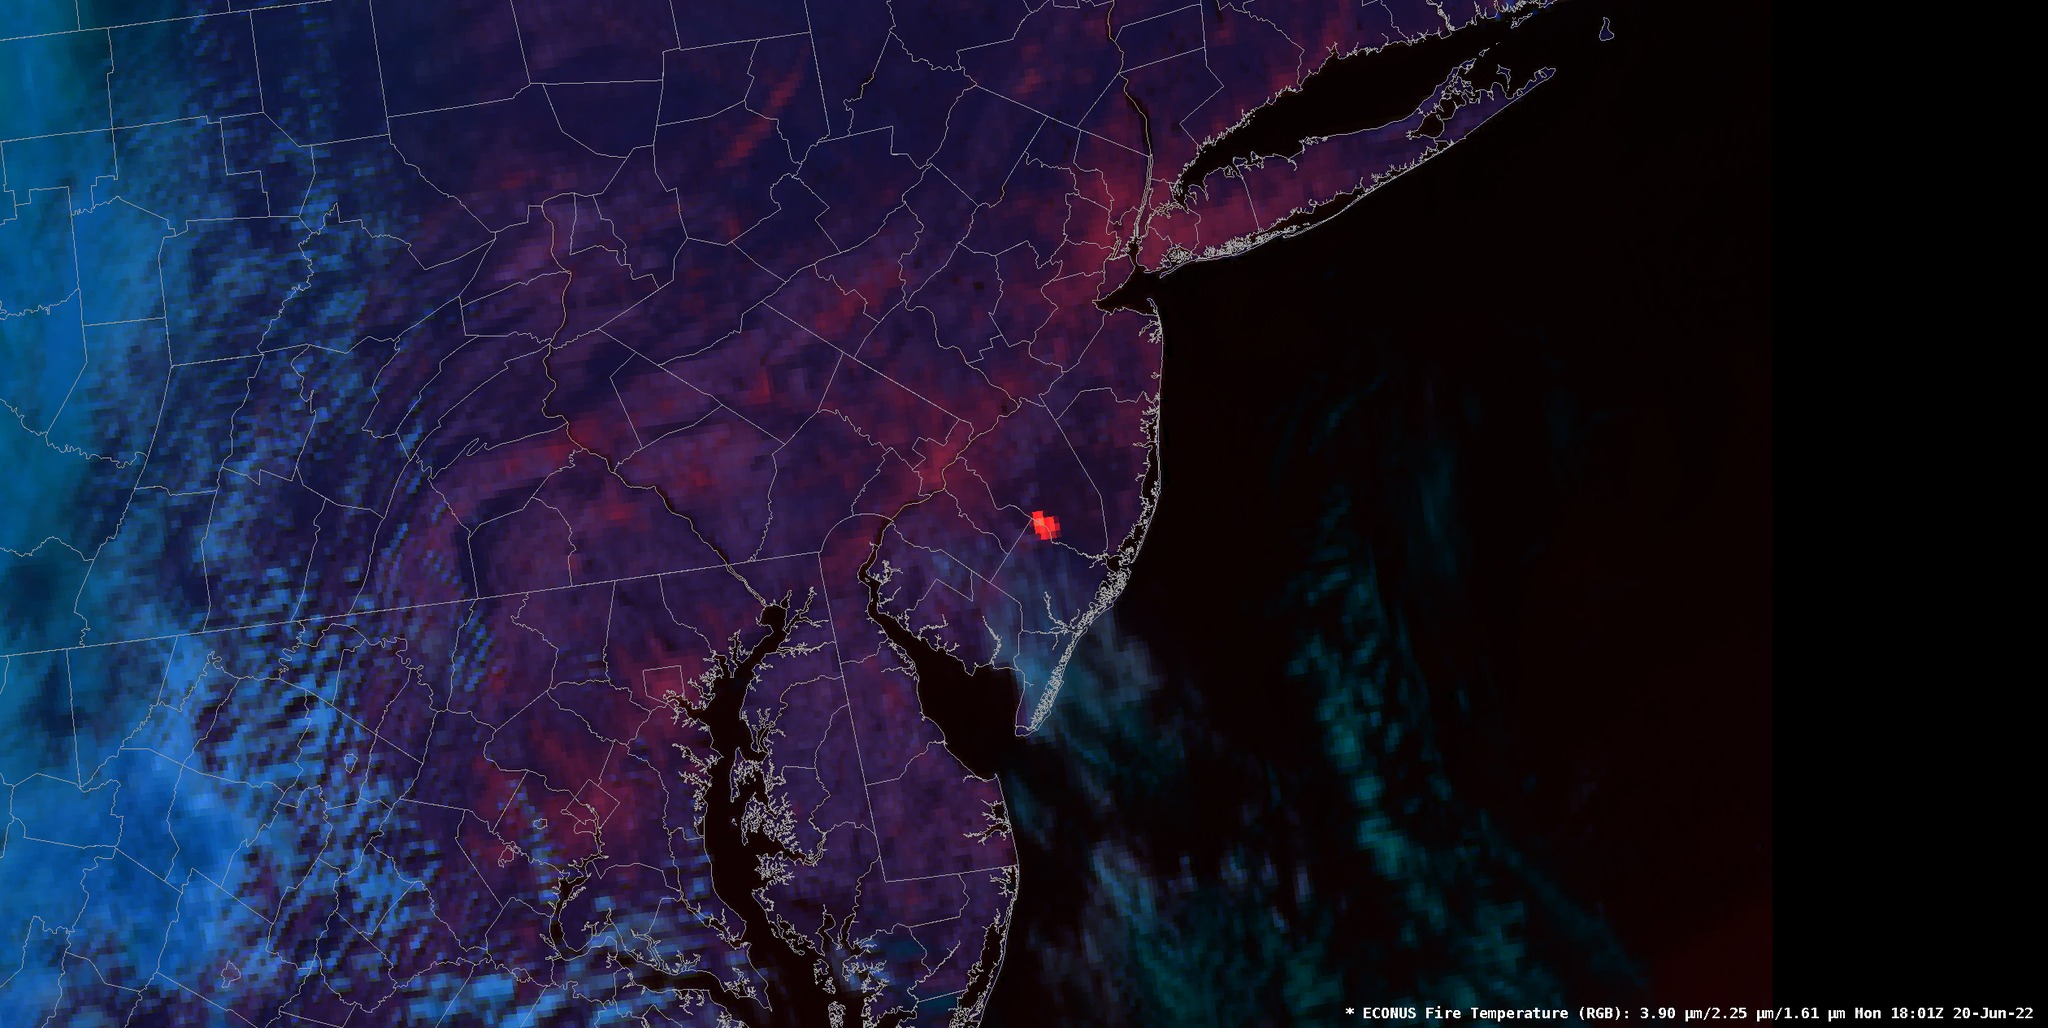 Mullica River fire observed on heat-sensitive satellite image on June 20th.